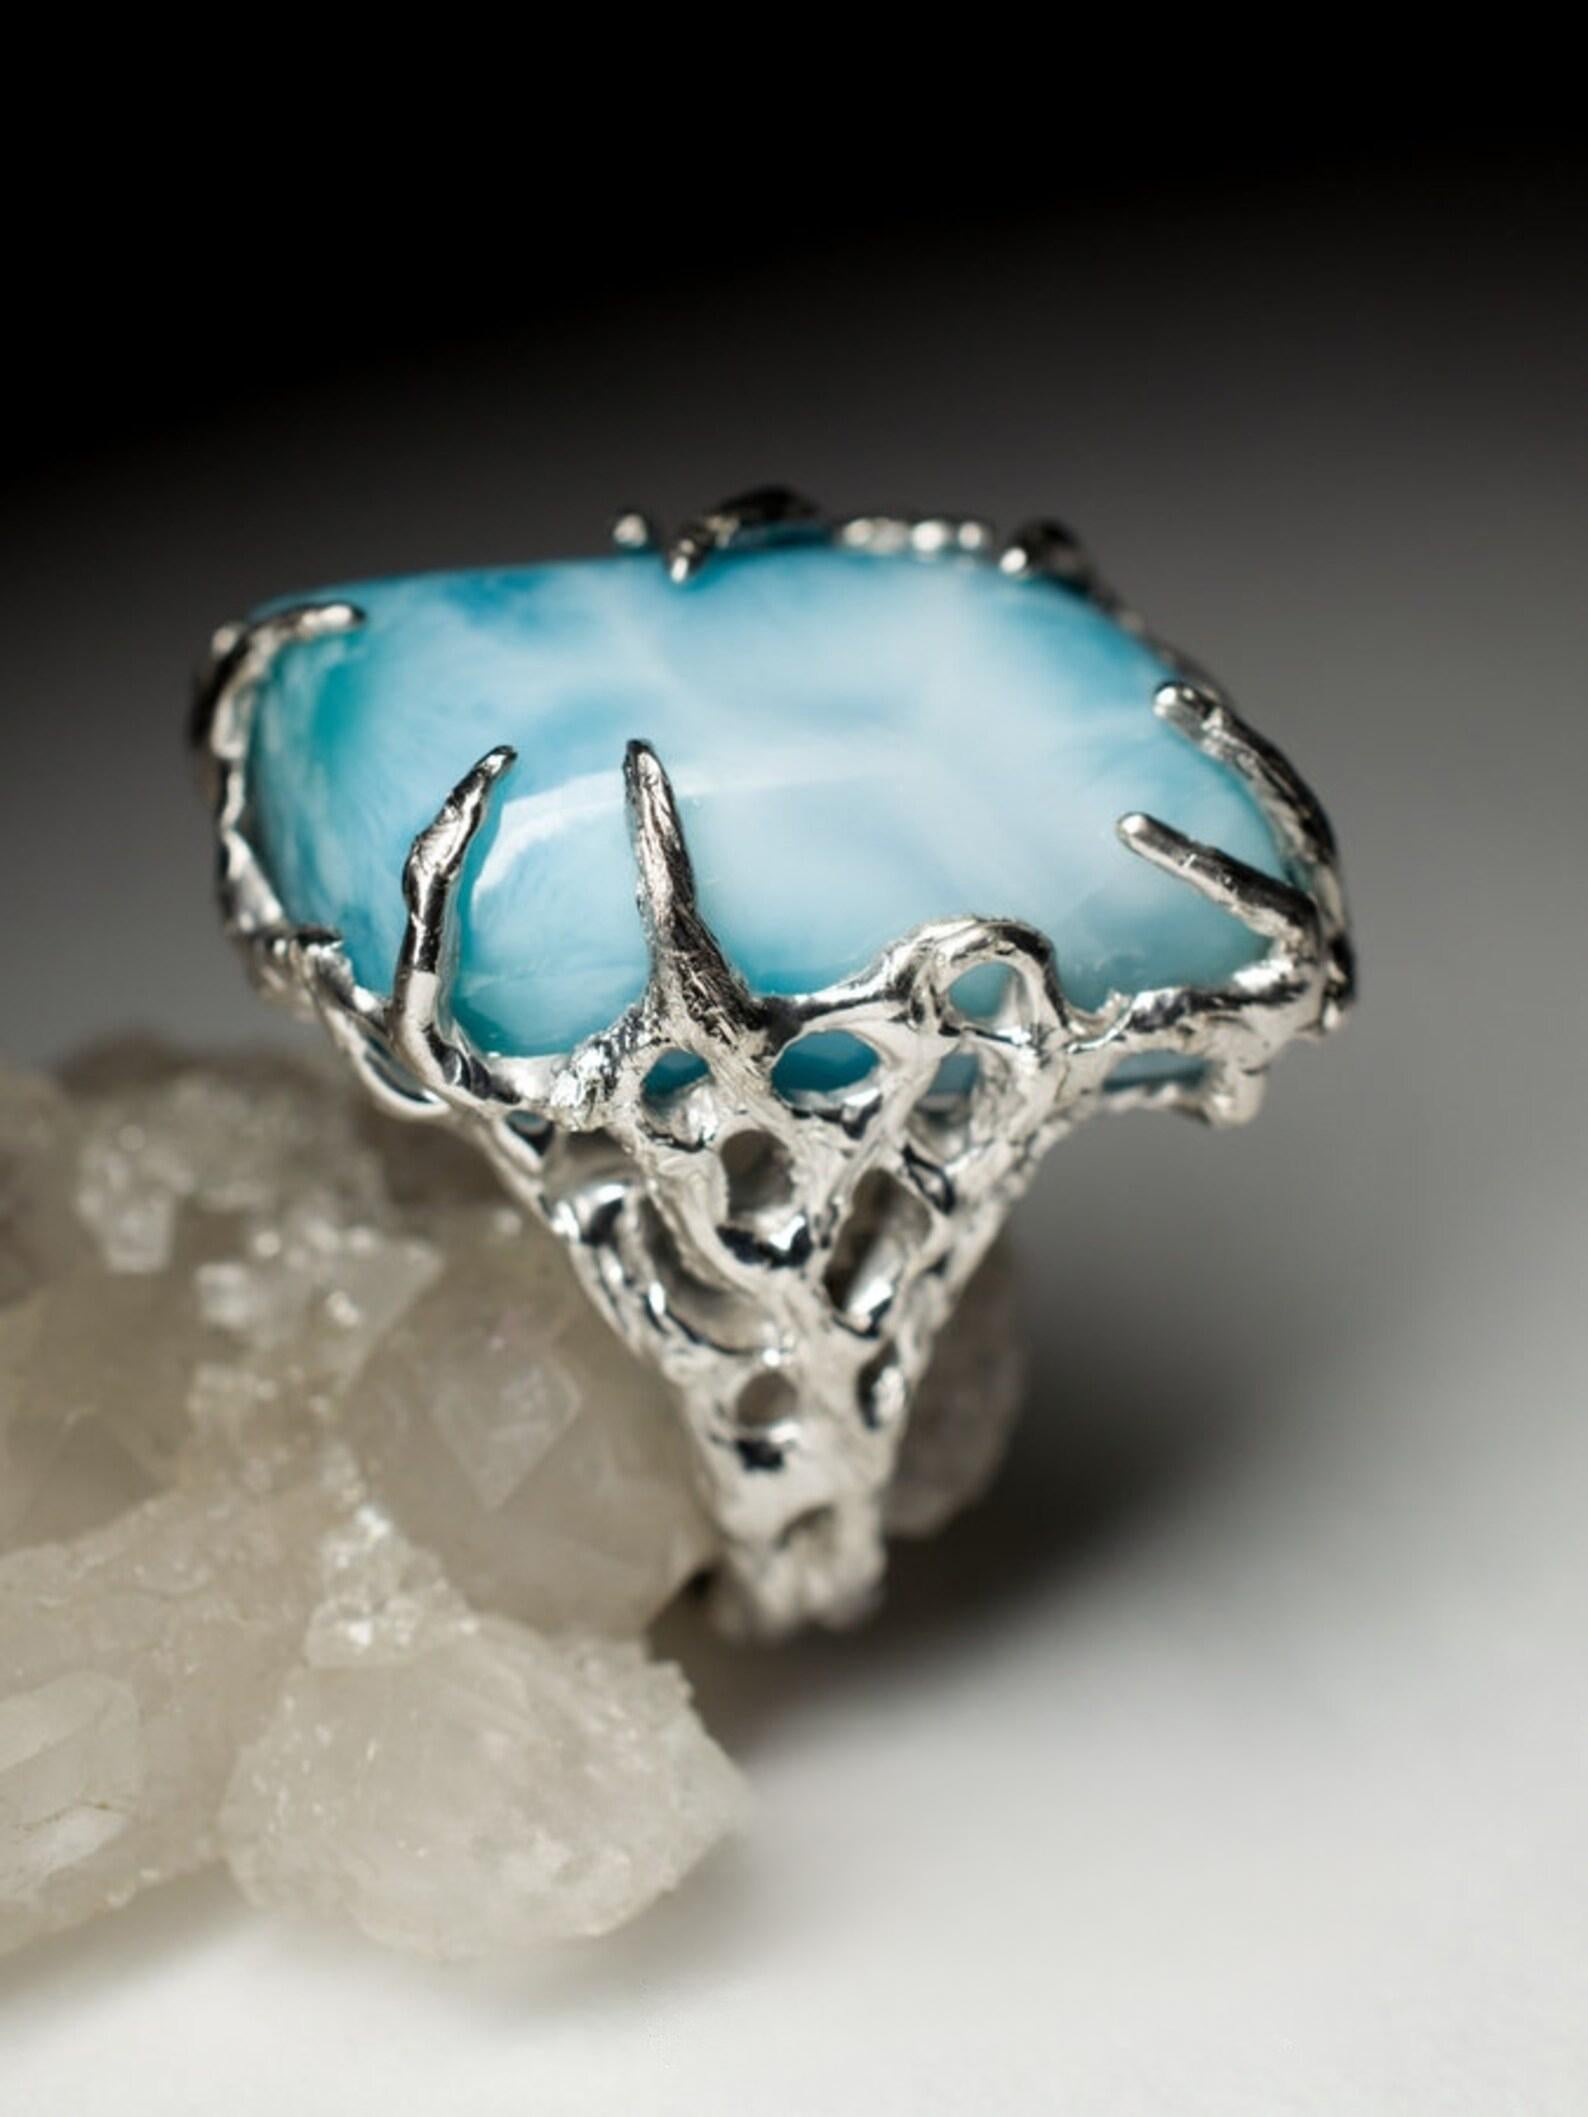 Cabochon Larimar Silver Ring Freeform Opaque Baby Blue Color Fantasy Natural Gemstone For Sale